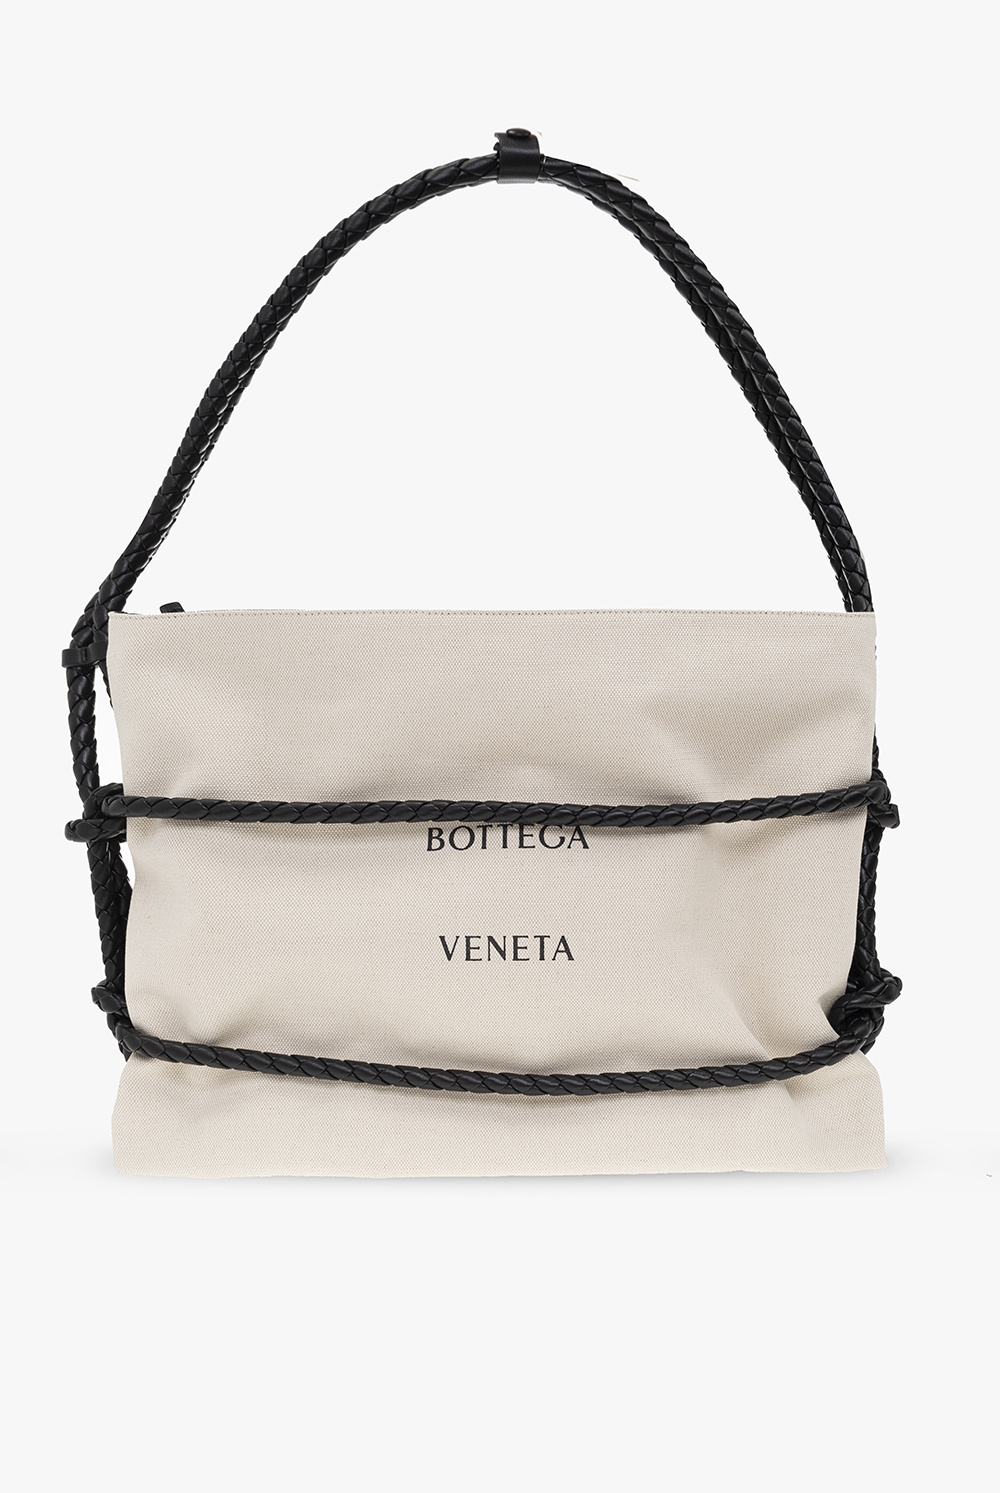 Bottega Veneta® Women's Printed Leather Trousers in Light beige. Shop  online now.